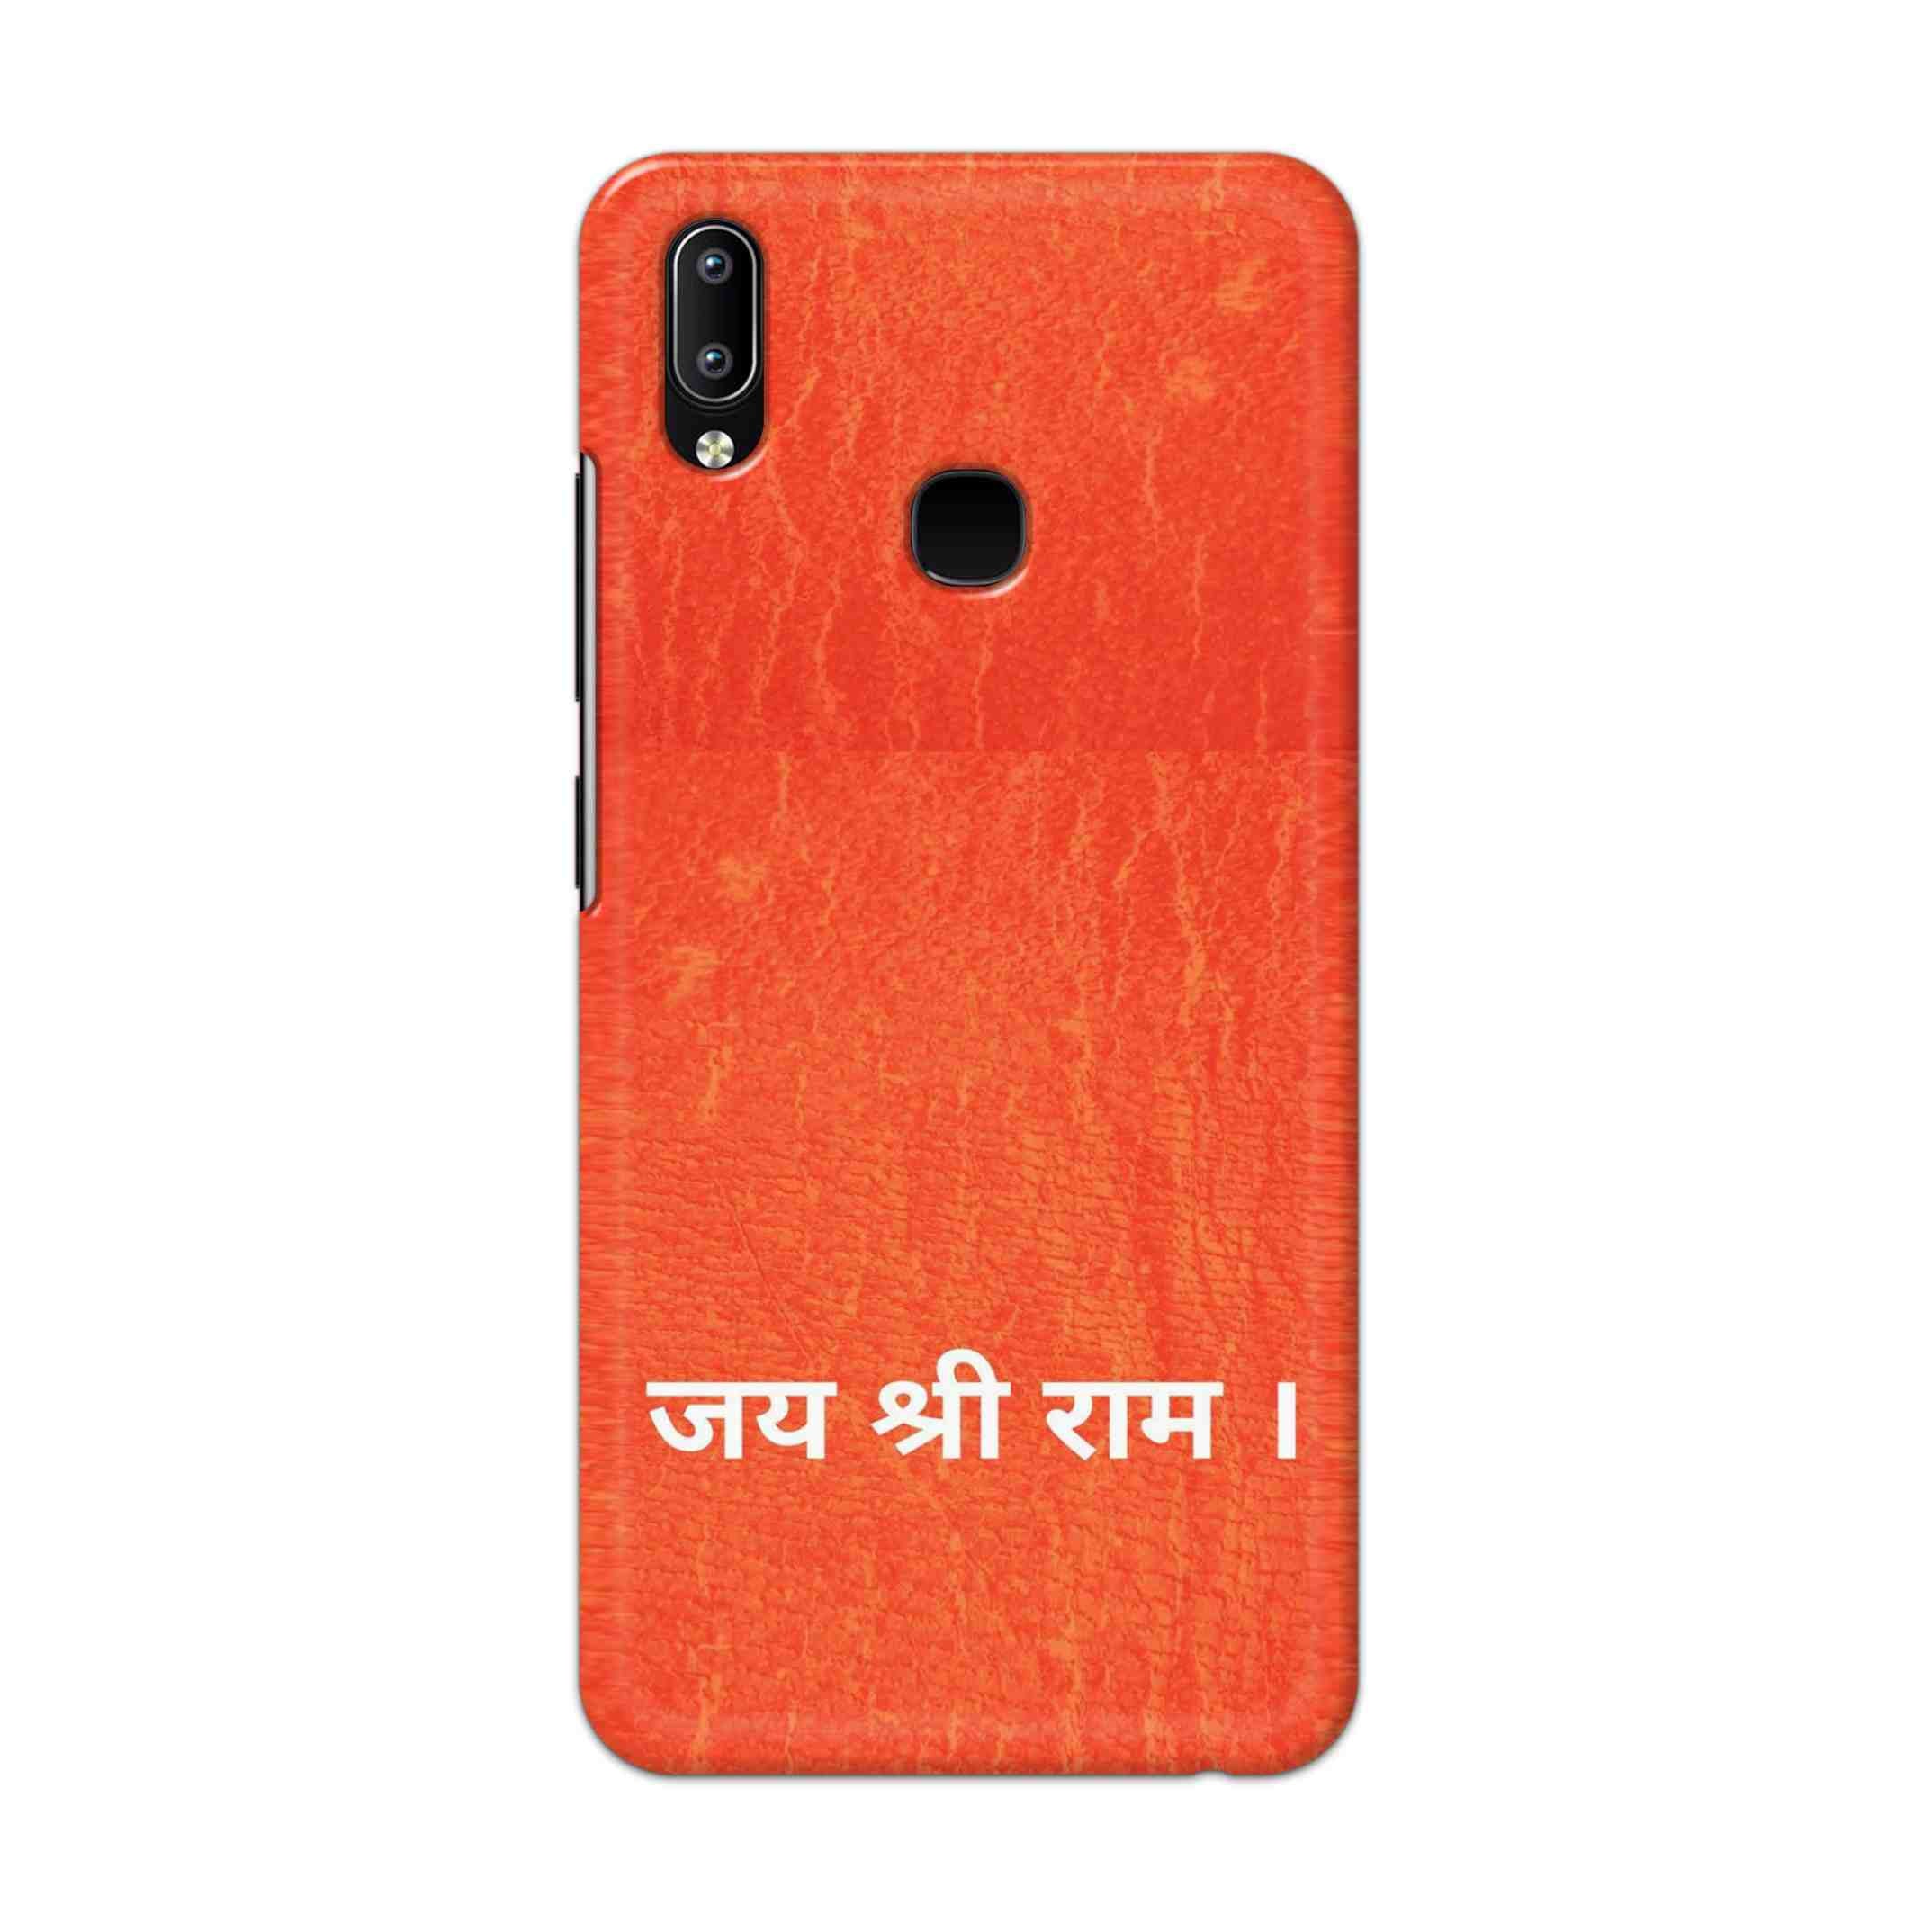 Buy Jai Shree Ram Hard Back Mobile Phone Case Cover For Vivo Y95 / Y93 / Y91 Online